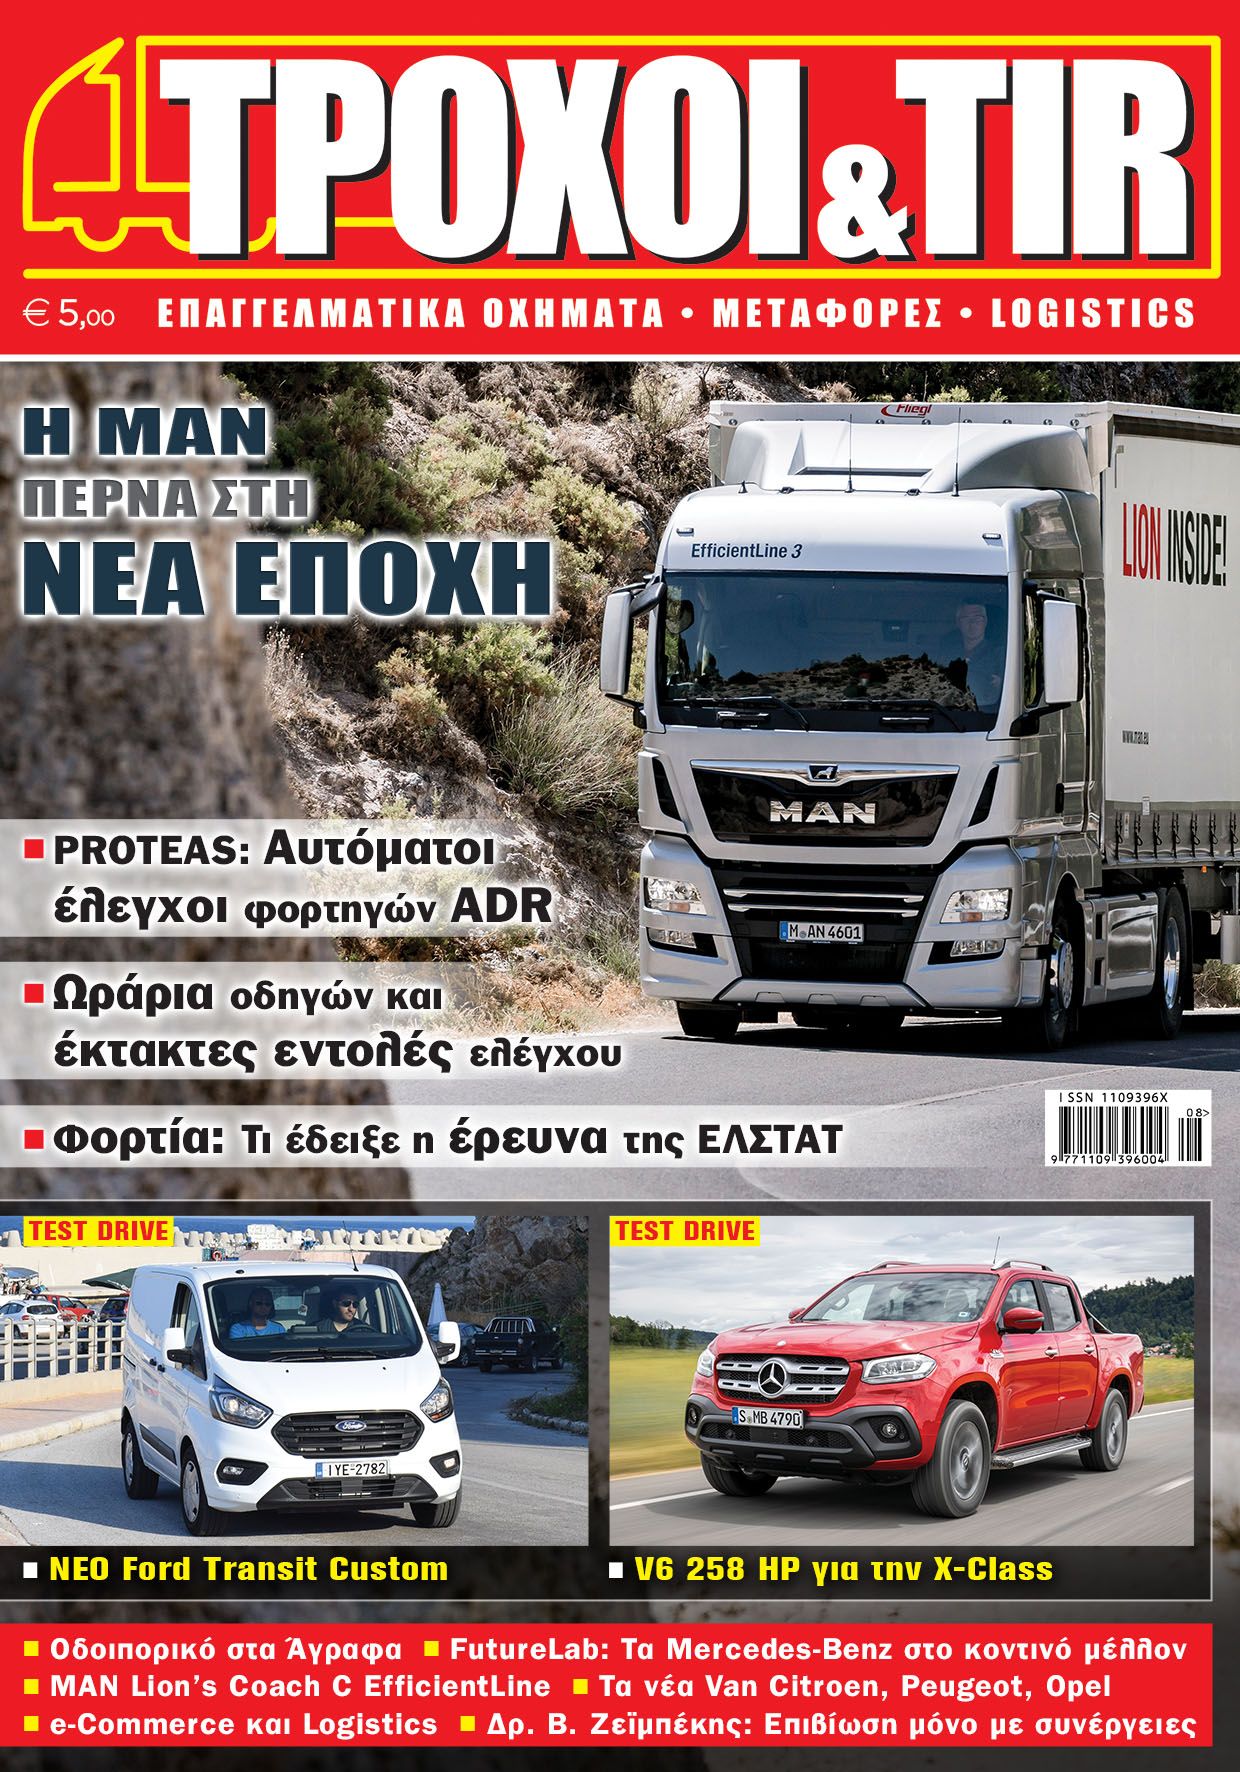 Troxoikaitir issue 364 august 2018 cover